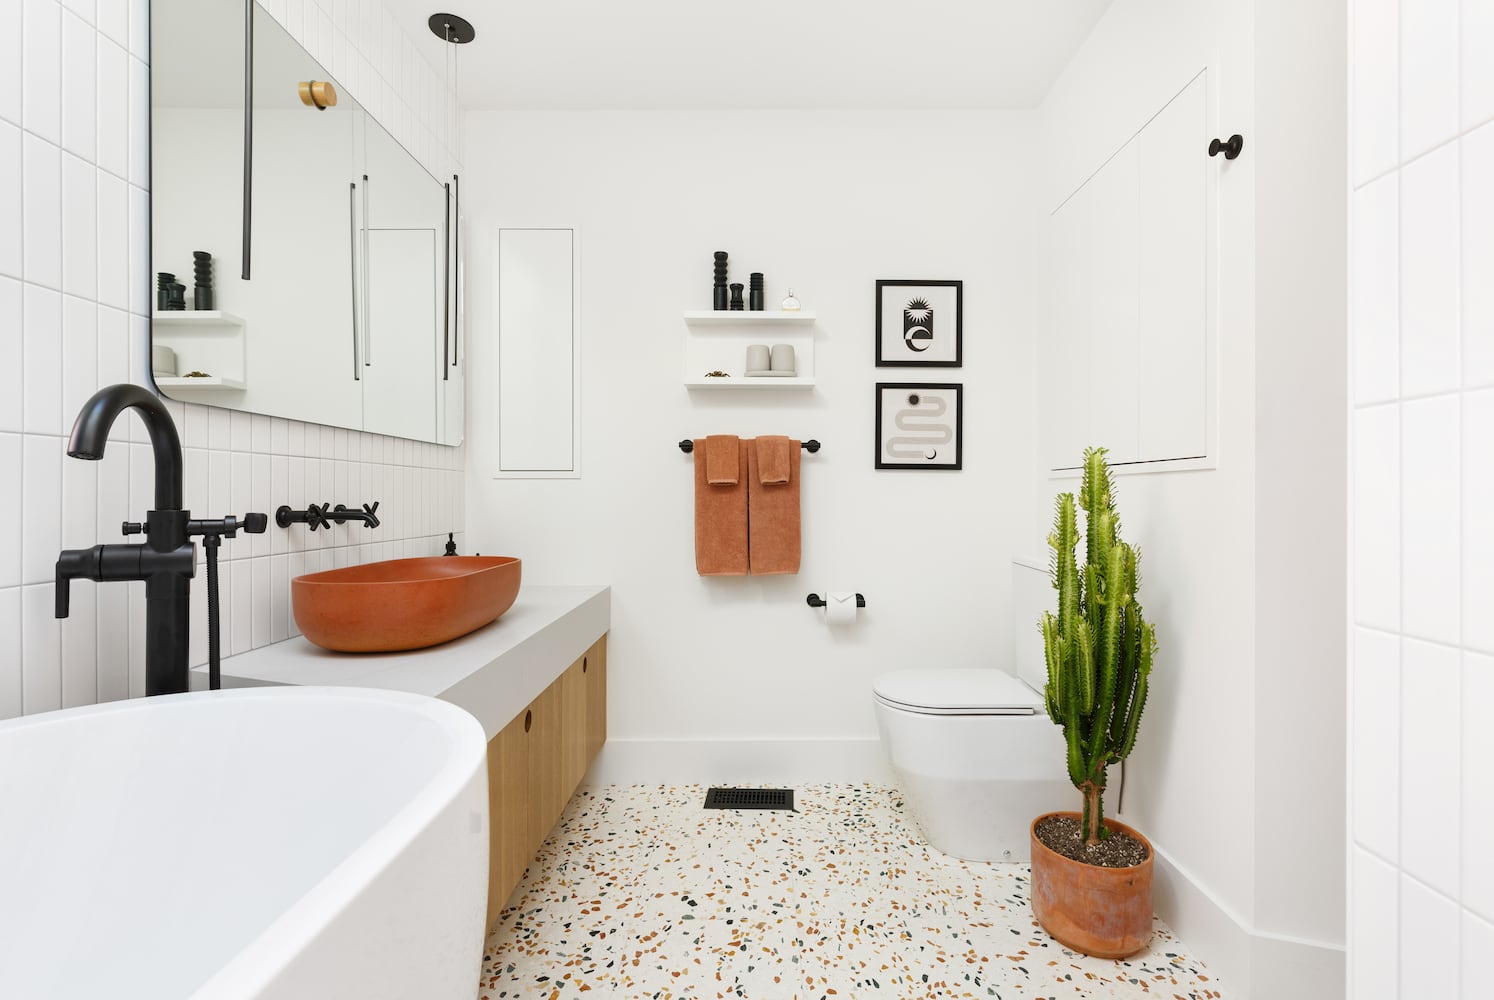 Portland residential bathroom remodel with terrazzo floors, angled floor plan